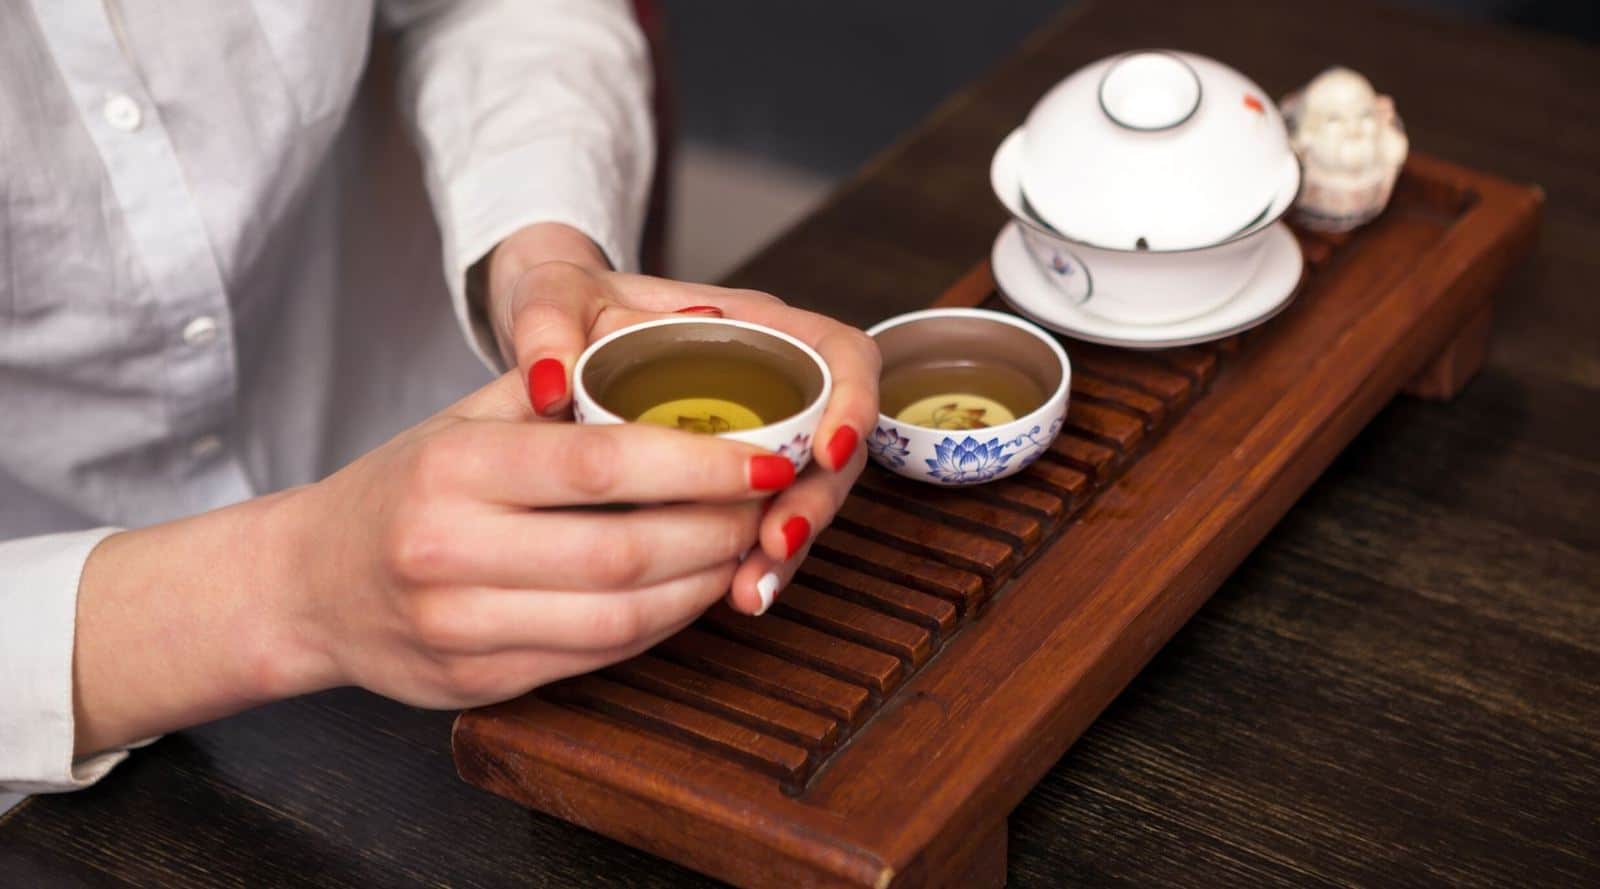 da hong pao tea: everything you need to know